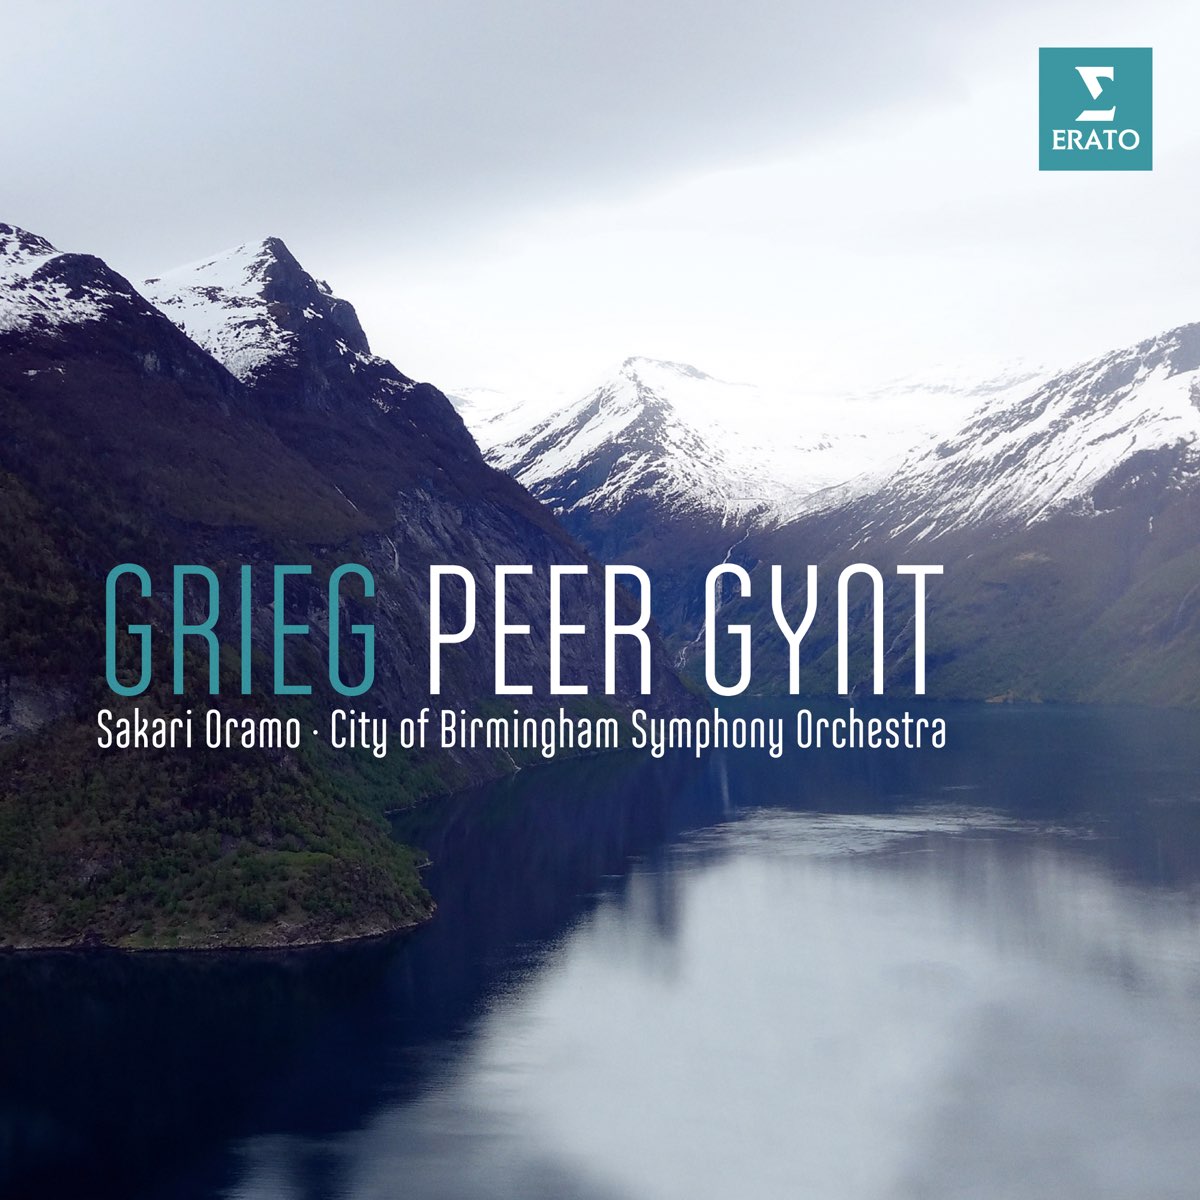 Grieg peer gynt